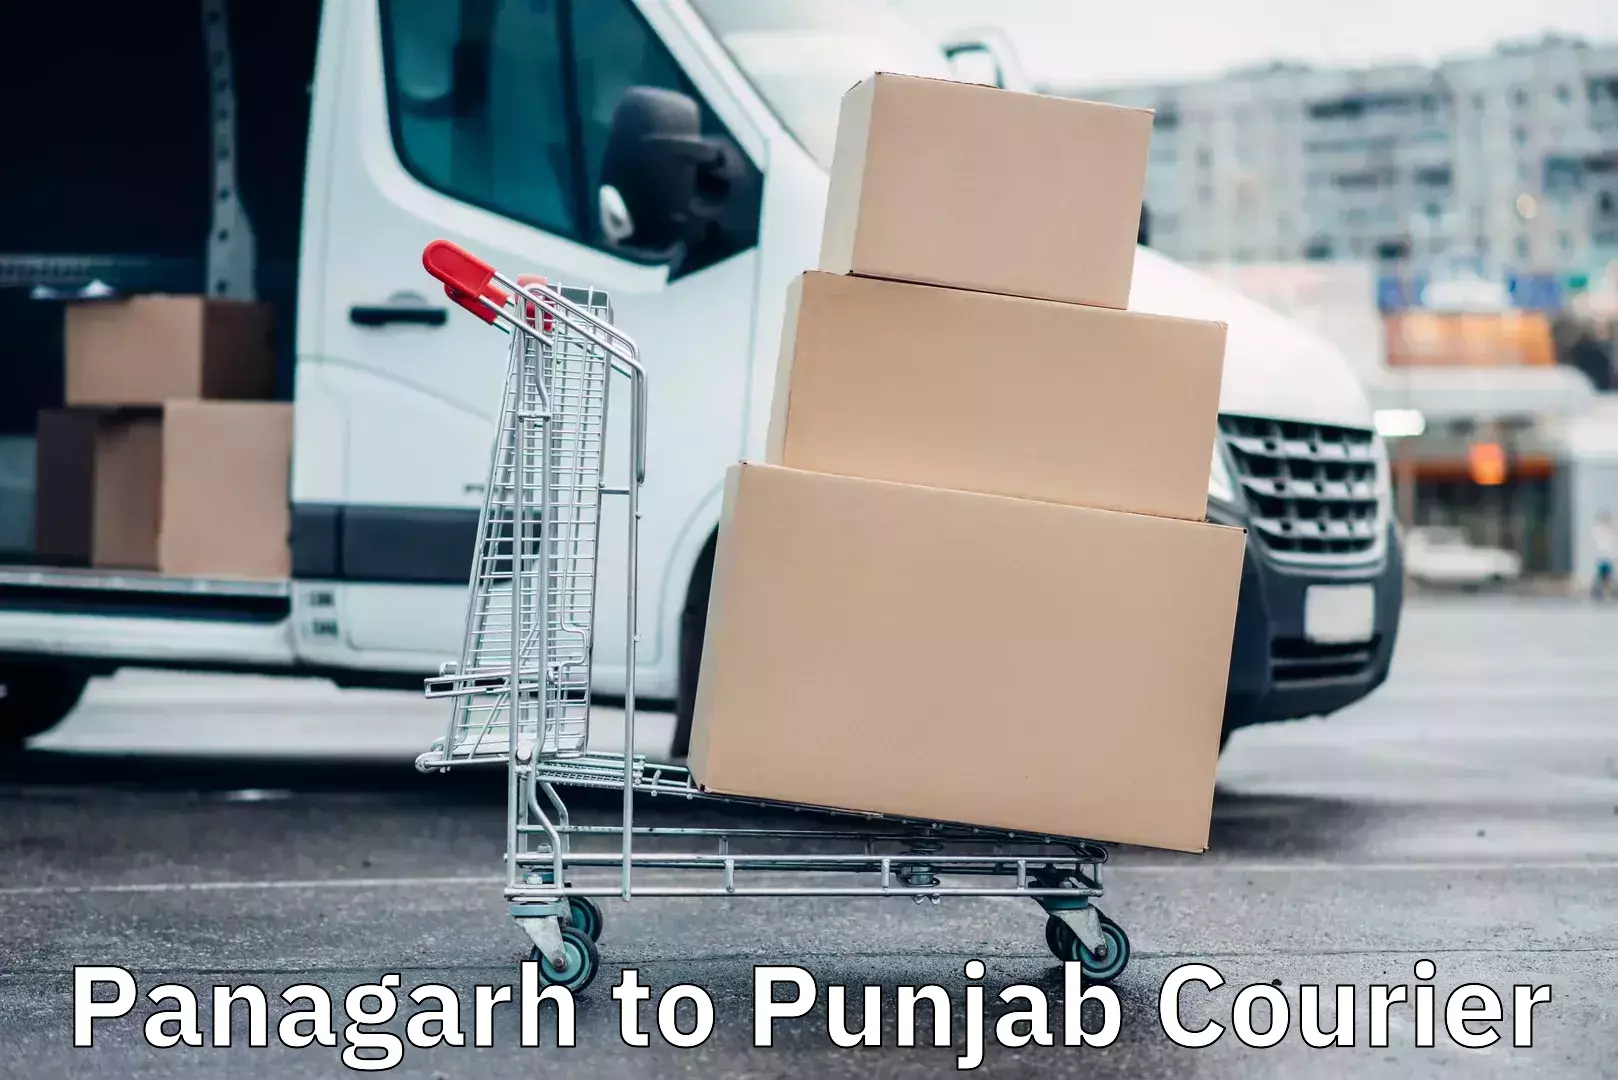 High-capacity parcel service Panagarh to Punjab